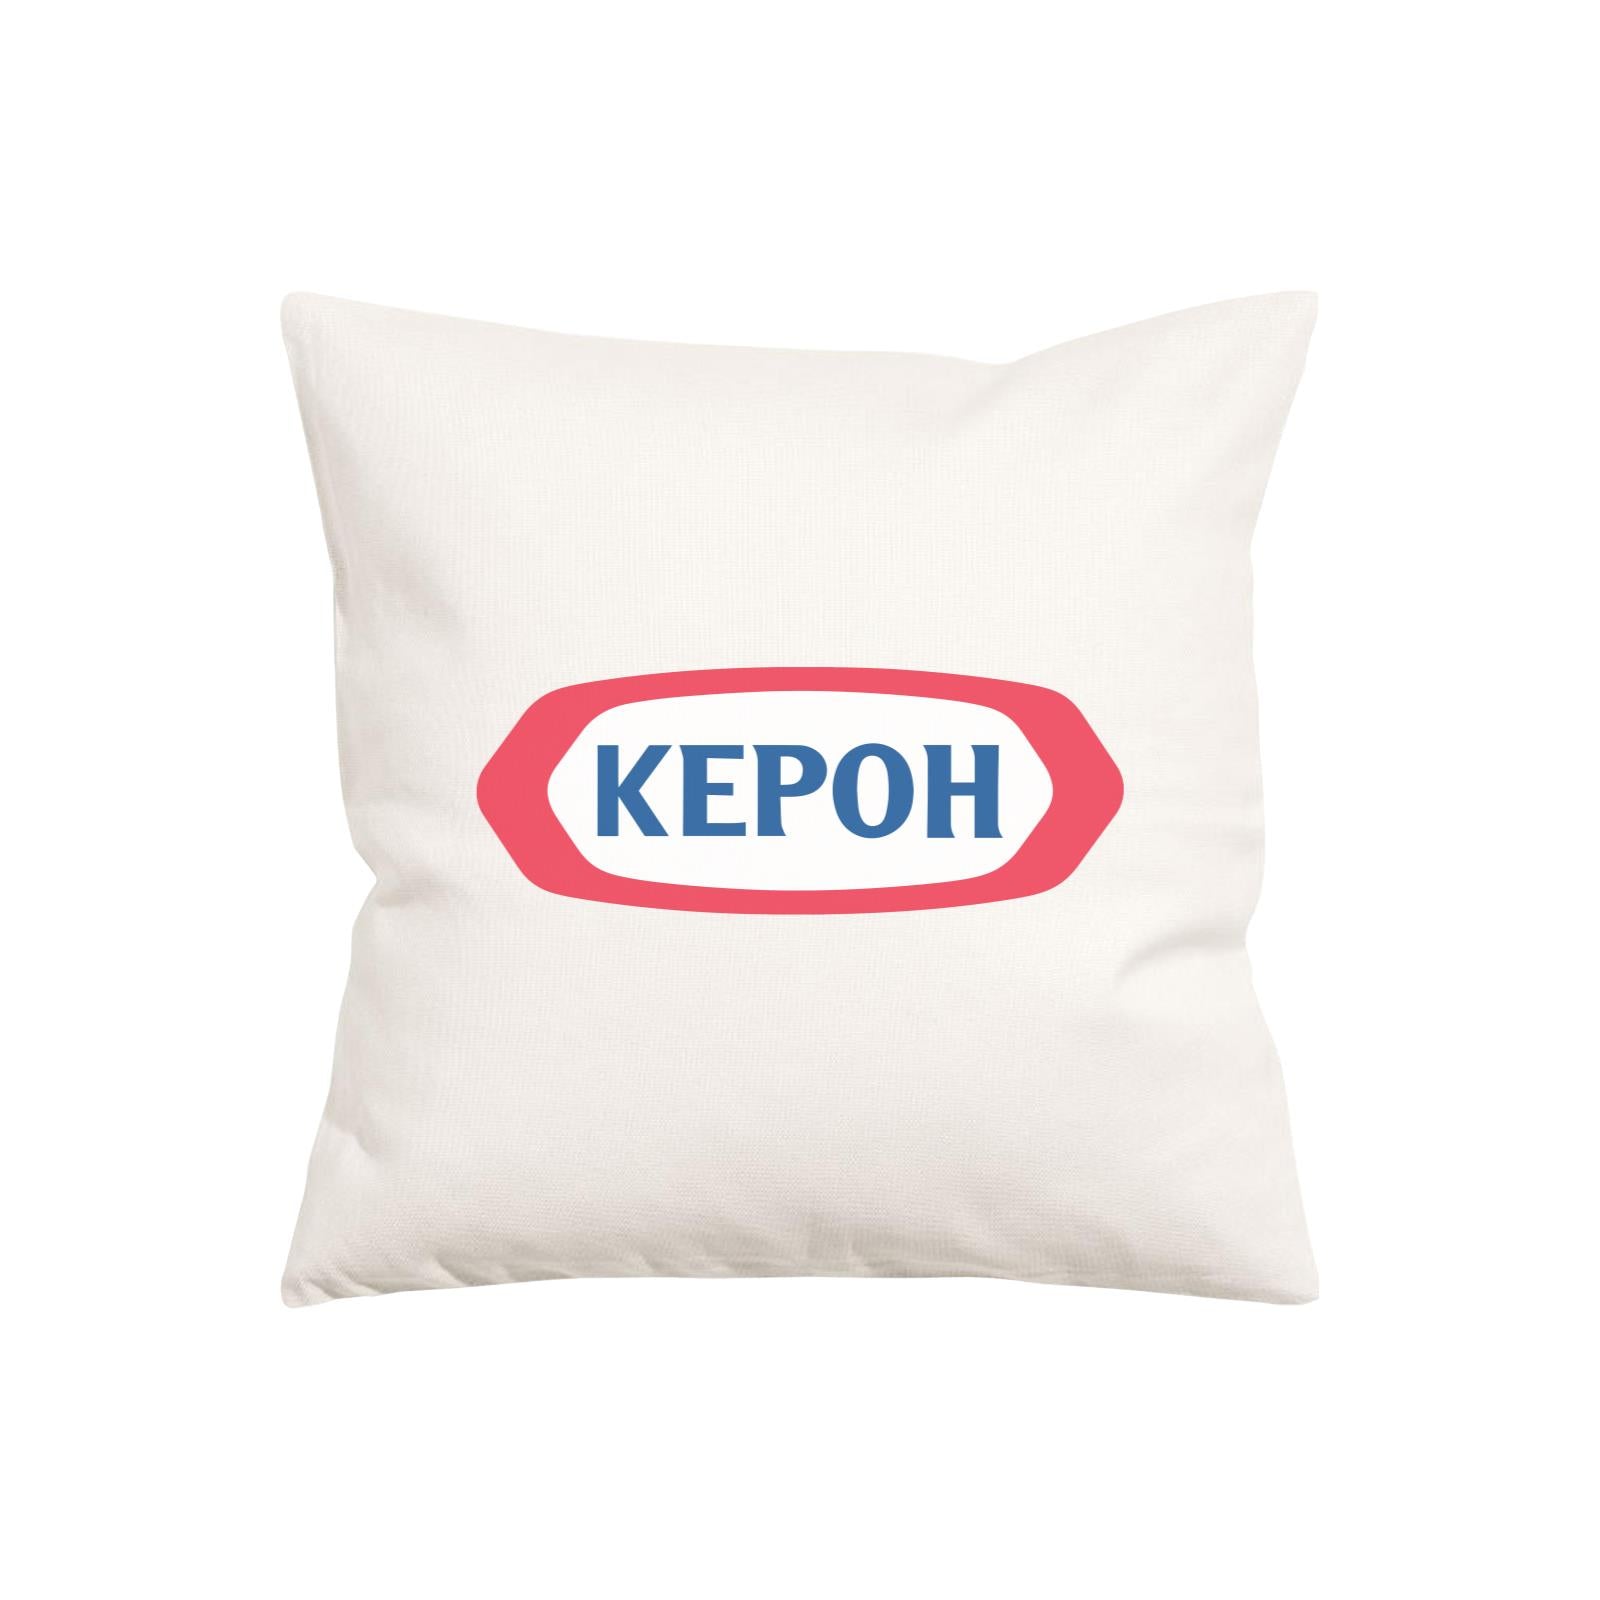 Slang Statement Kepoh Pillow Cushion